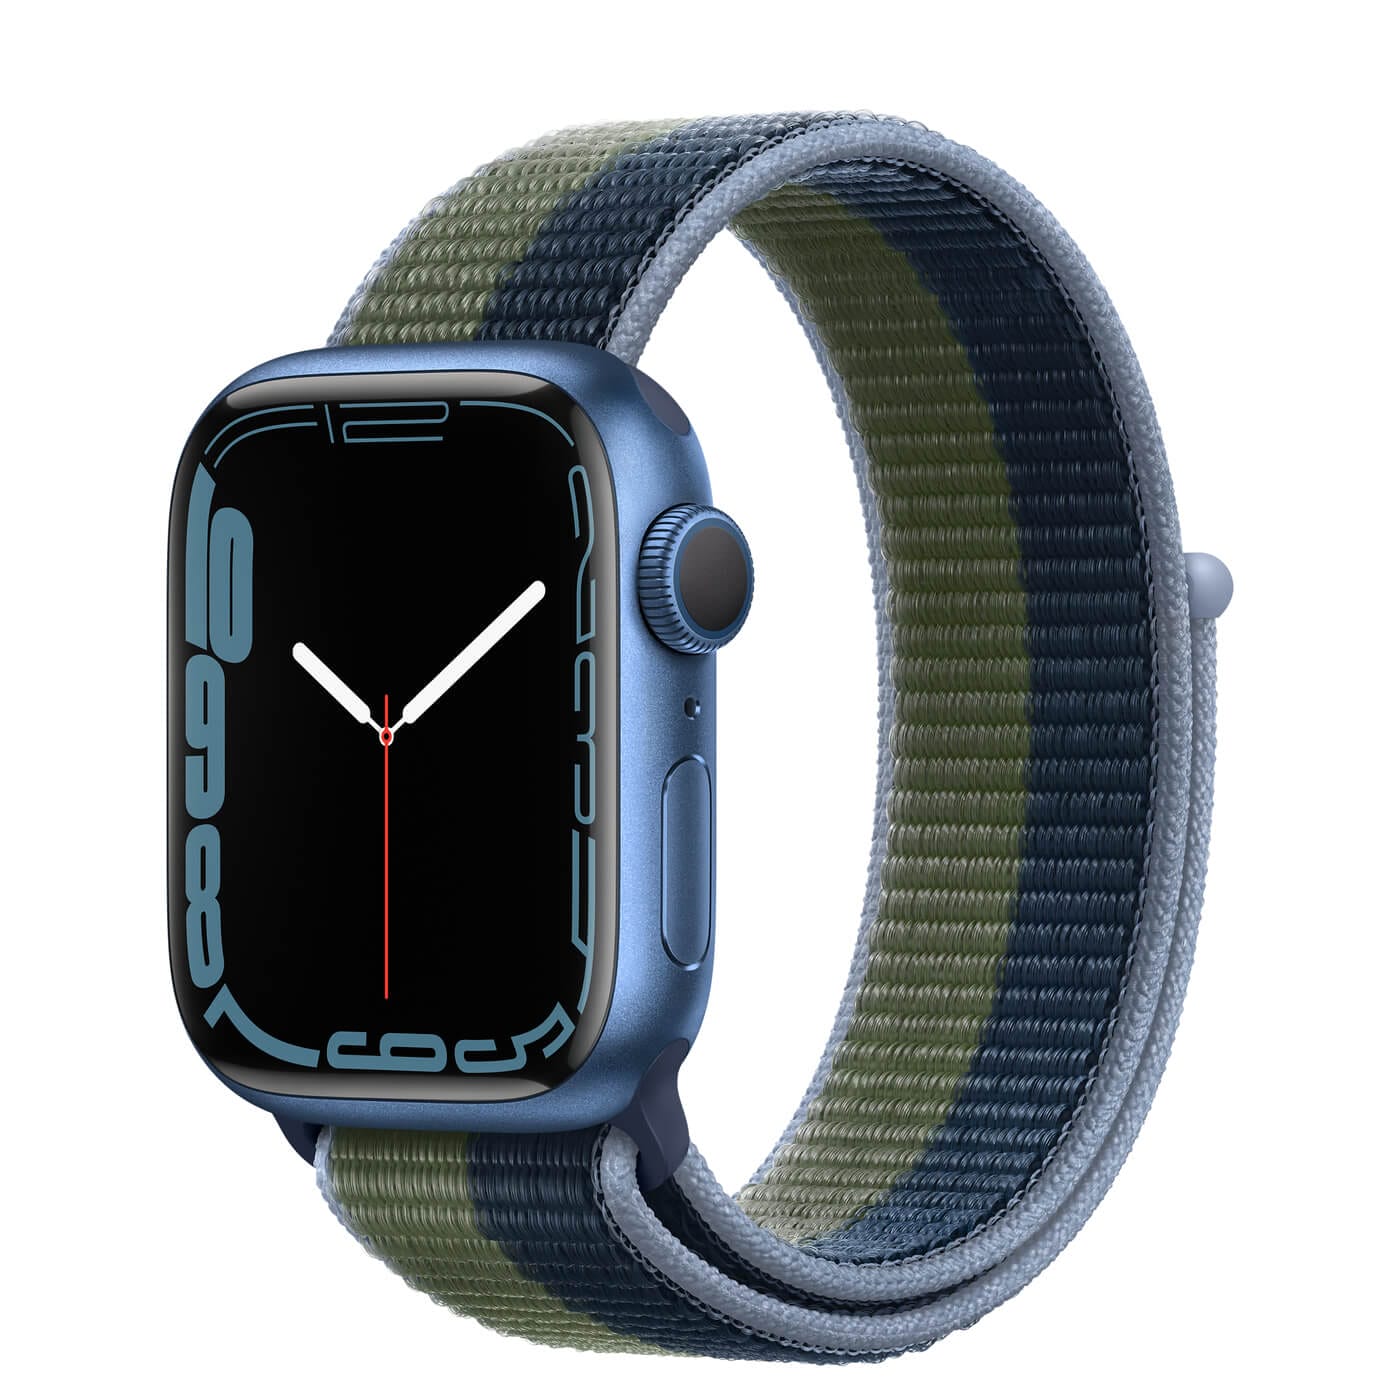 Apple Watch Series 7 with Sport Loop Strap